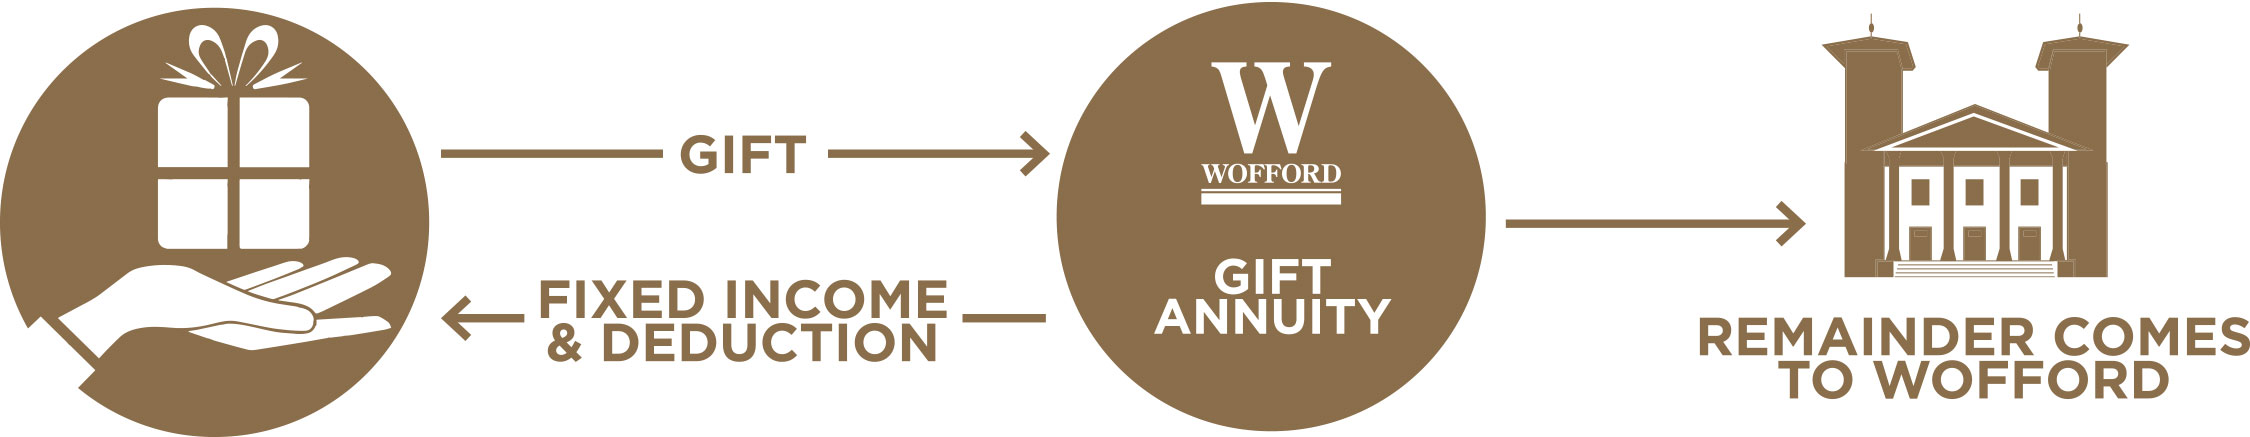 Charitable Gift Annuity diagram